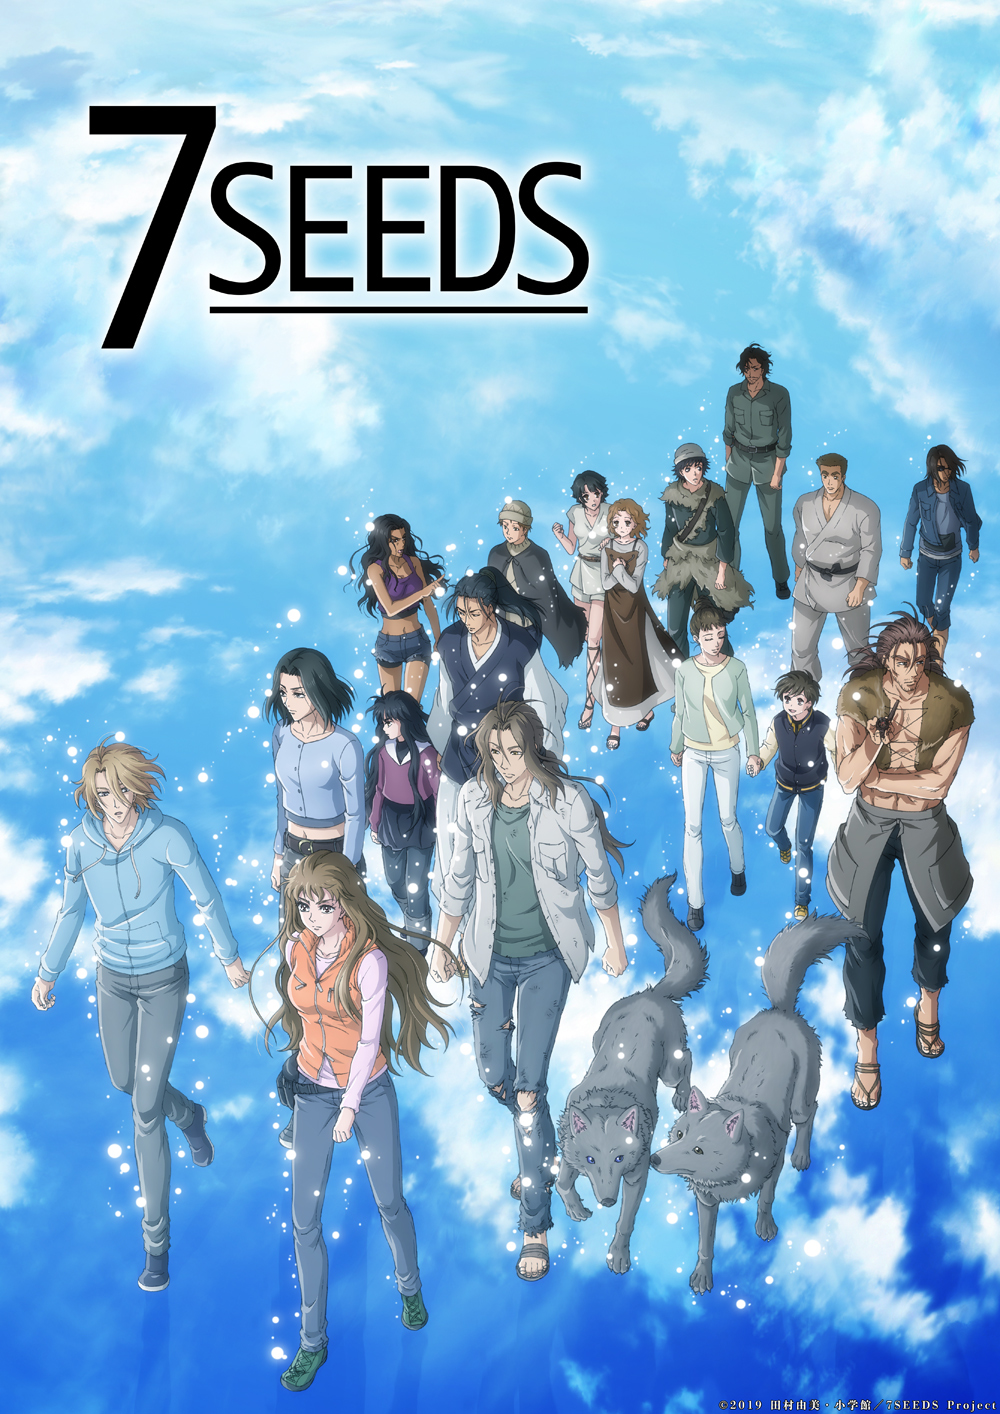 Netflixオリジナルアニメシリーズ『7SEEDS』